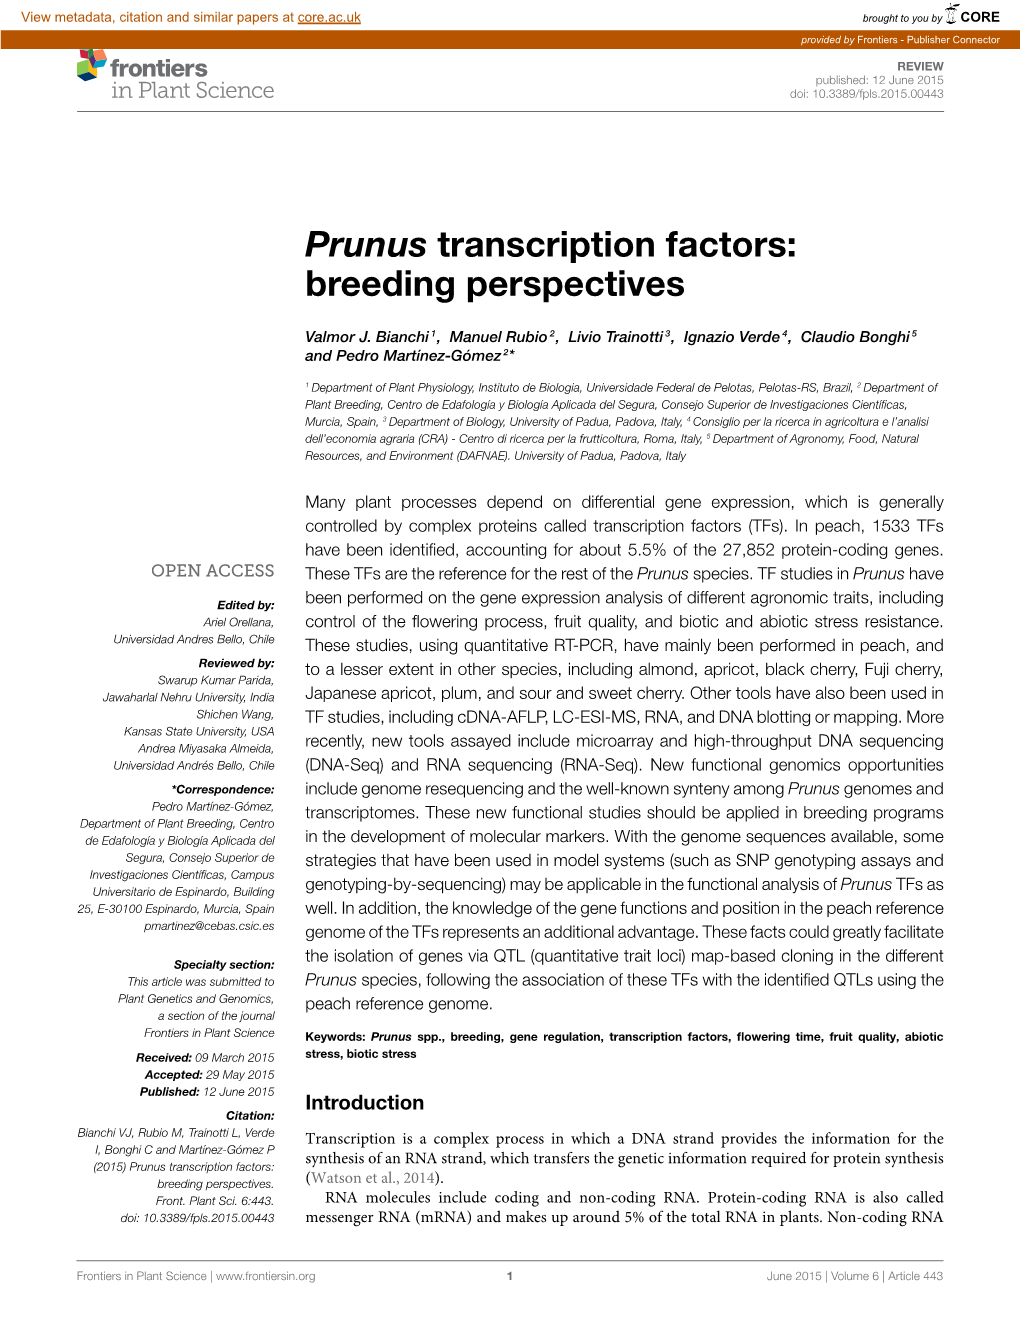 Prunus Transcription Factors: Breeding Perspectives